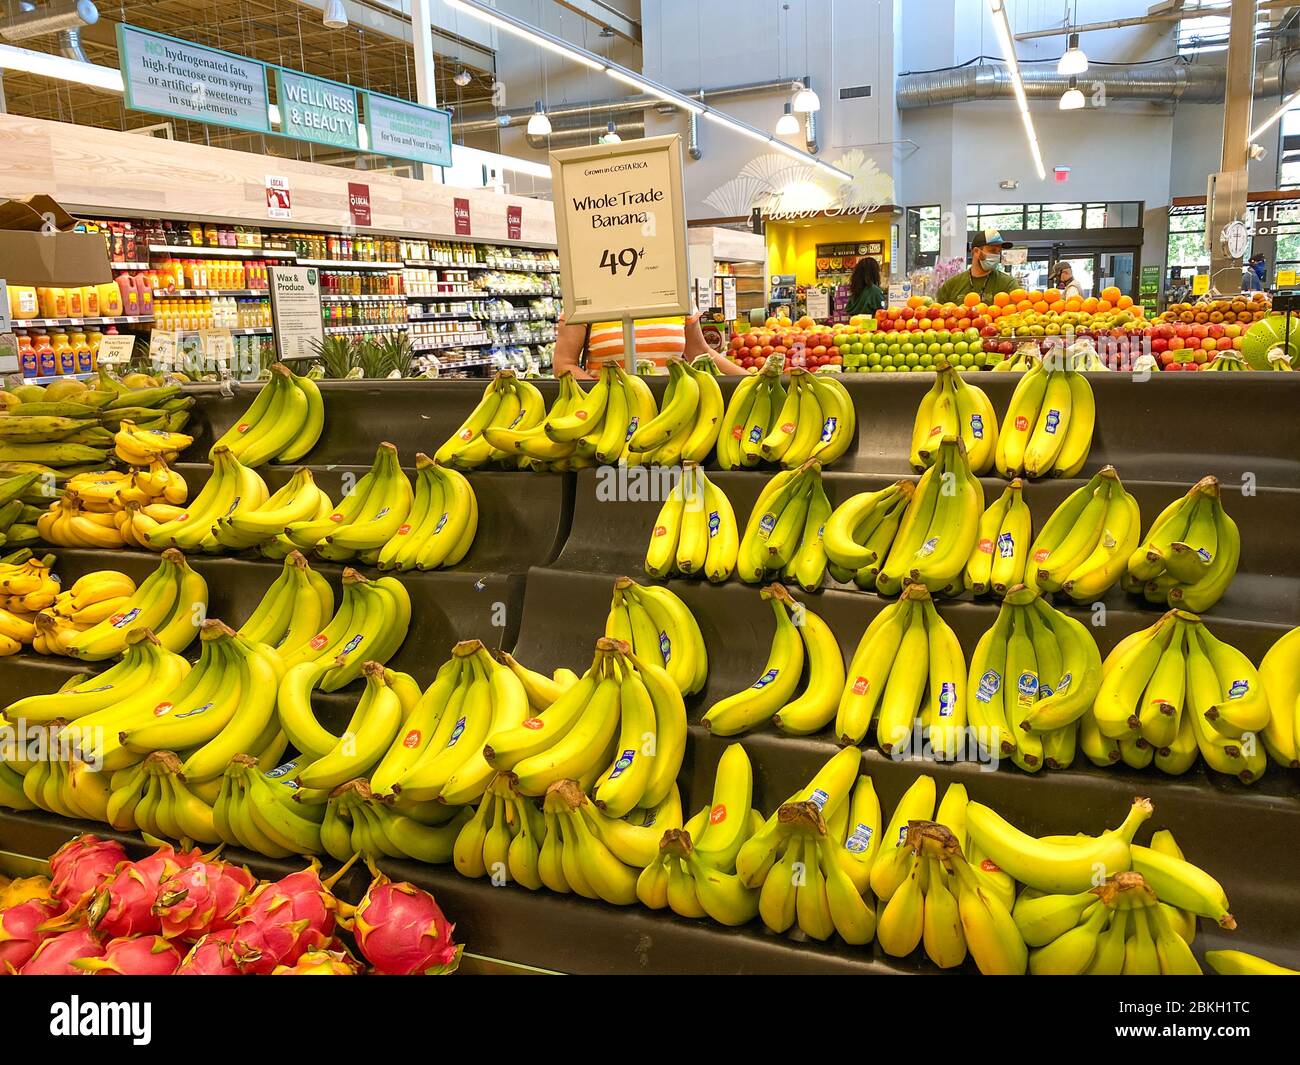 https://c8.alamy.com/comp/2BKH1TC/orlandoflusa-5320-a-display-of-fresh-chiquita-bananas-at-a-whole-foods-grocery-store-2BKH1TC.jpg